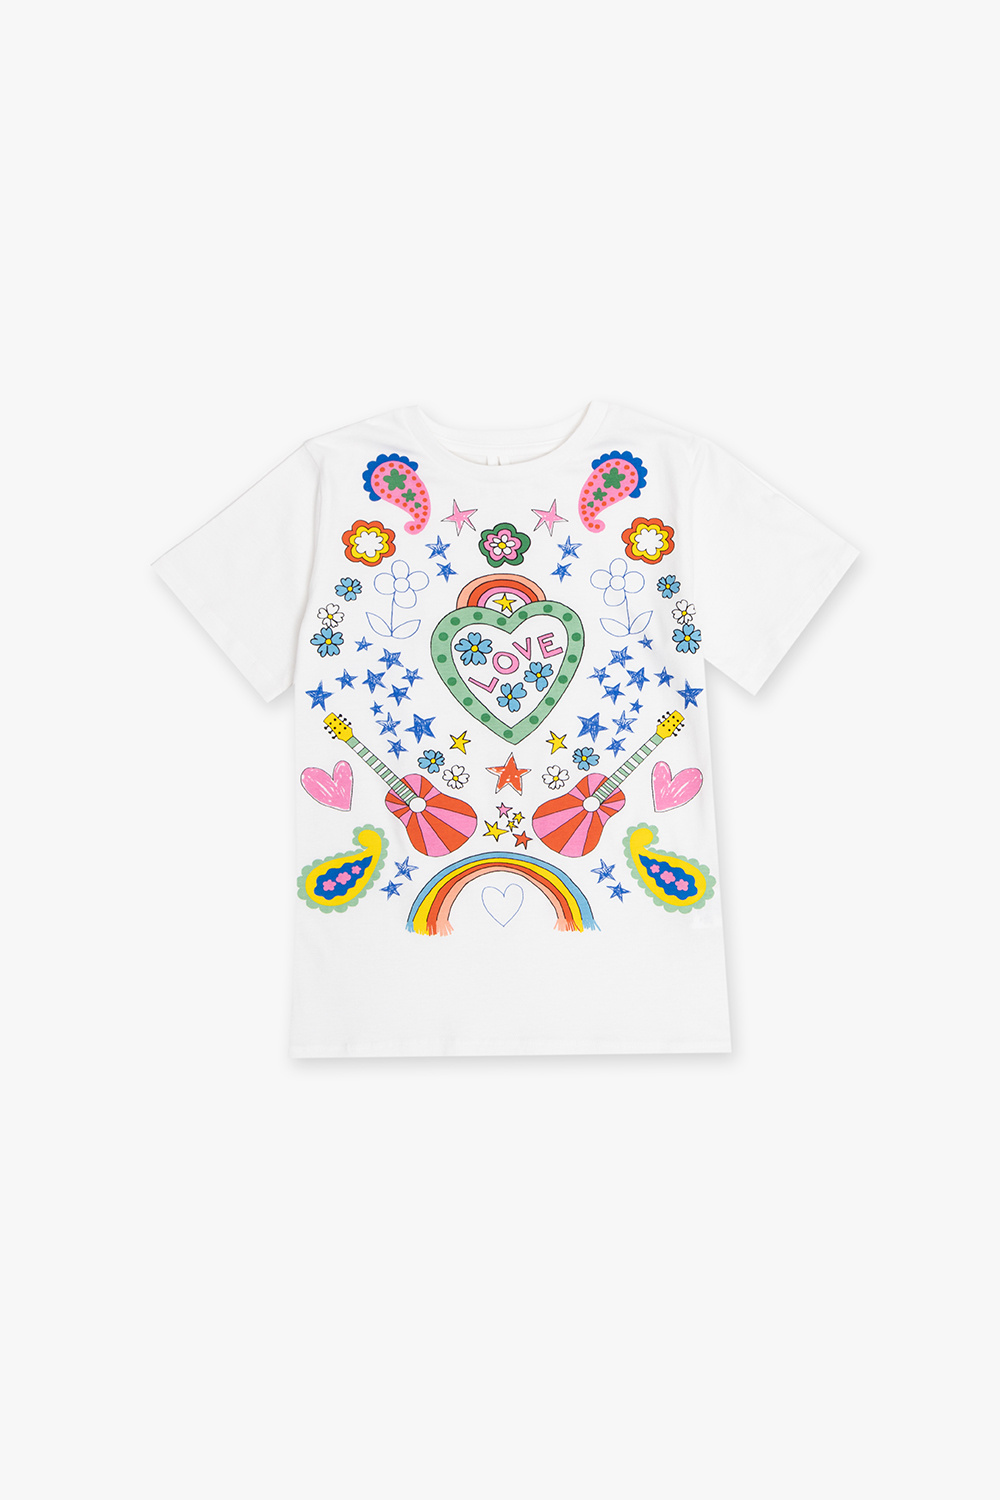 stella belt McCartney Kids Printed T-shirt